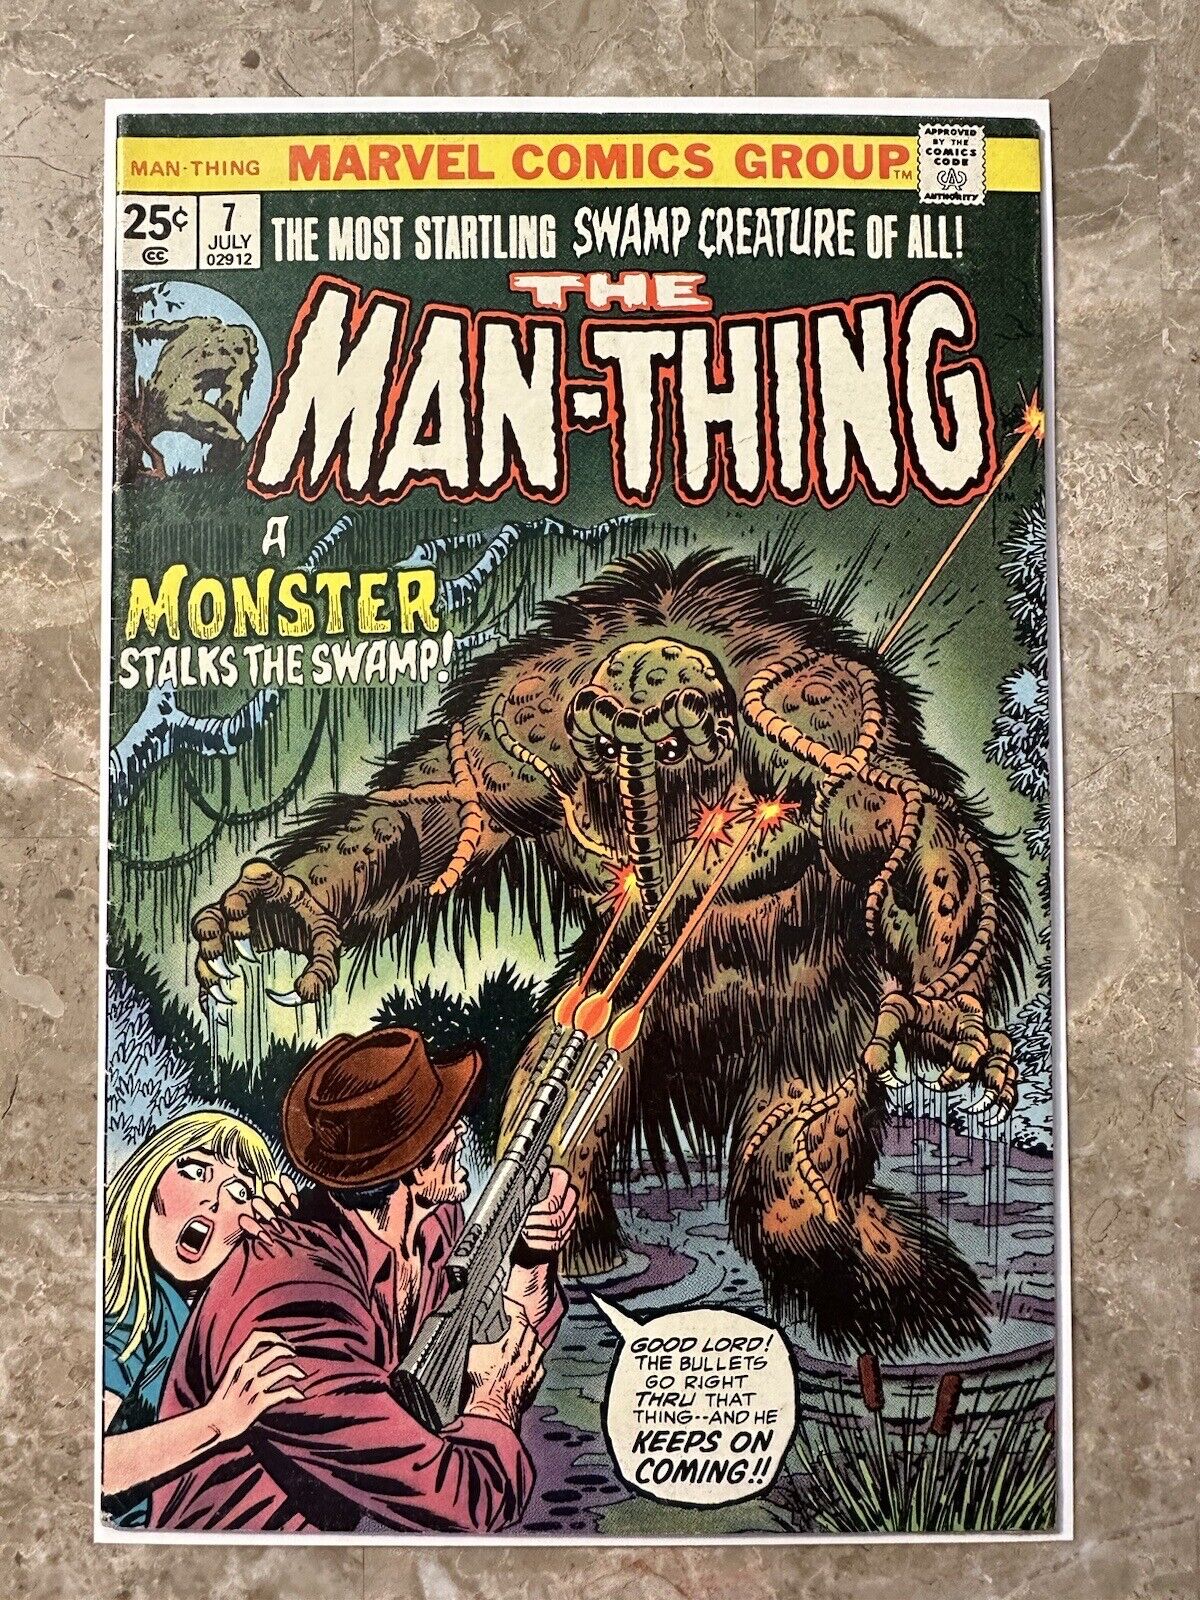 Man Thing #7 (Marvel Comics 1974) - VF-